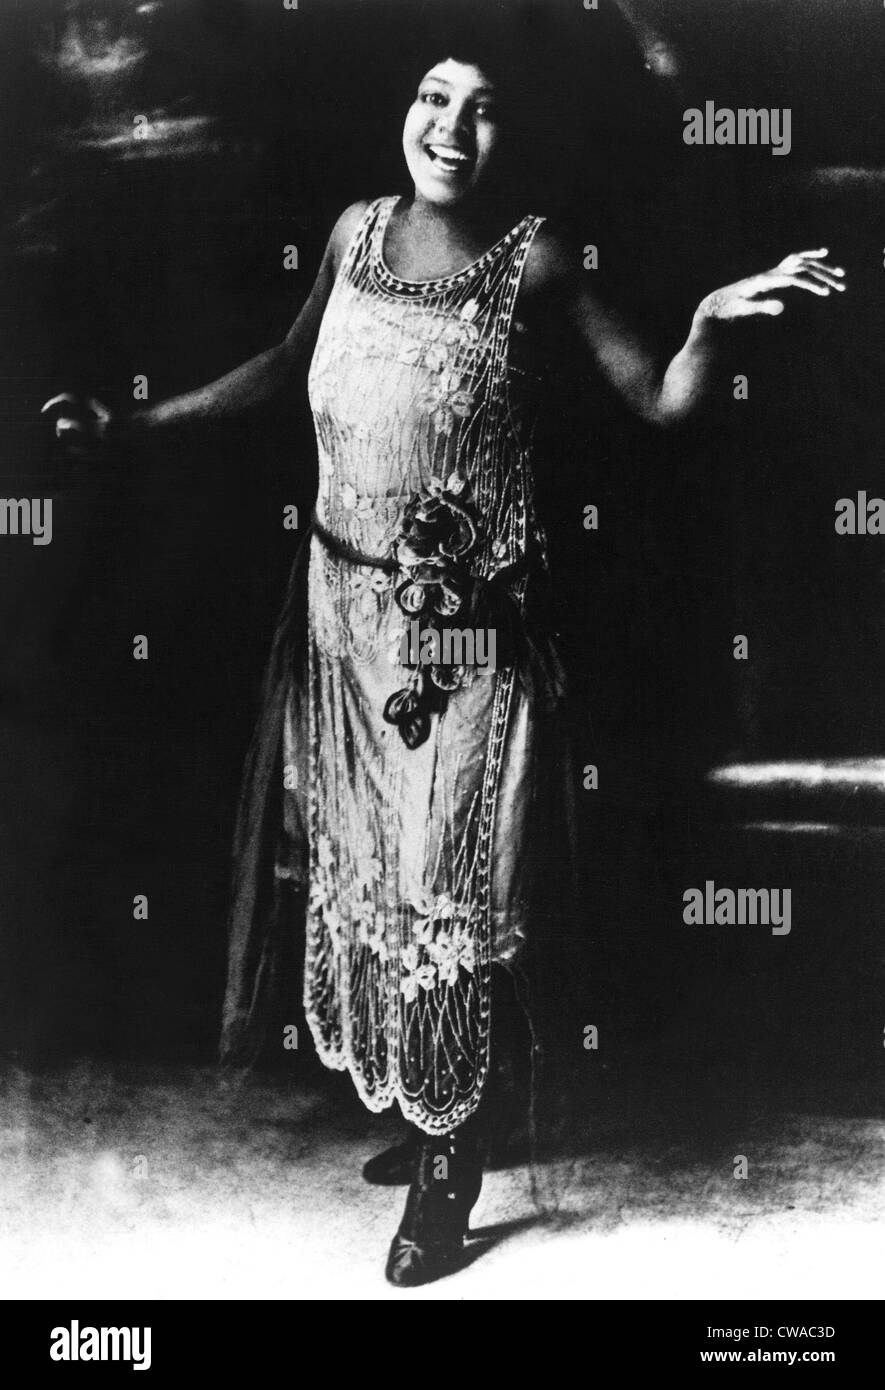 Bessie Smith, cantante de blues, 1920. Cortesía: CSU Archives / Everett Collection Foto de stock